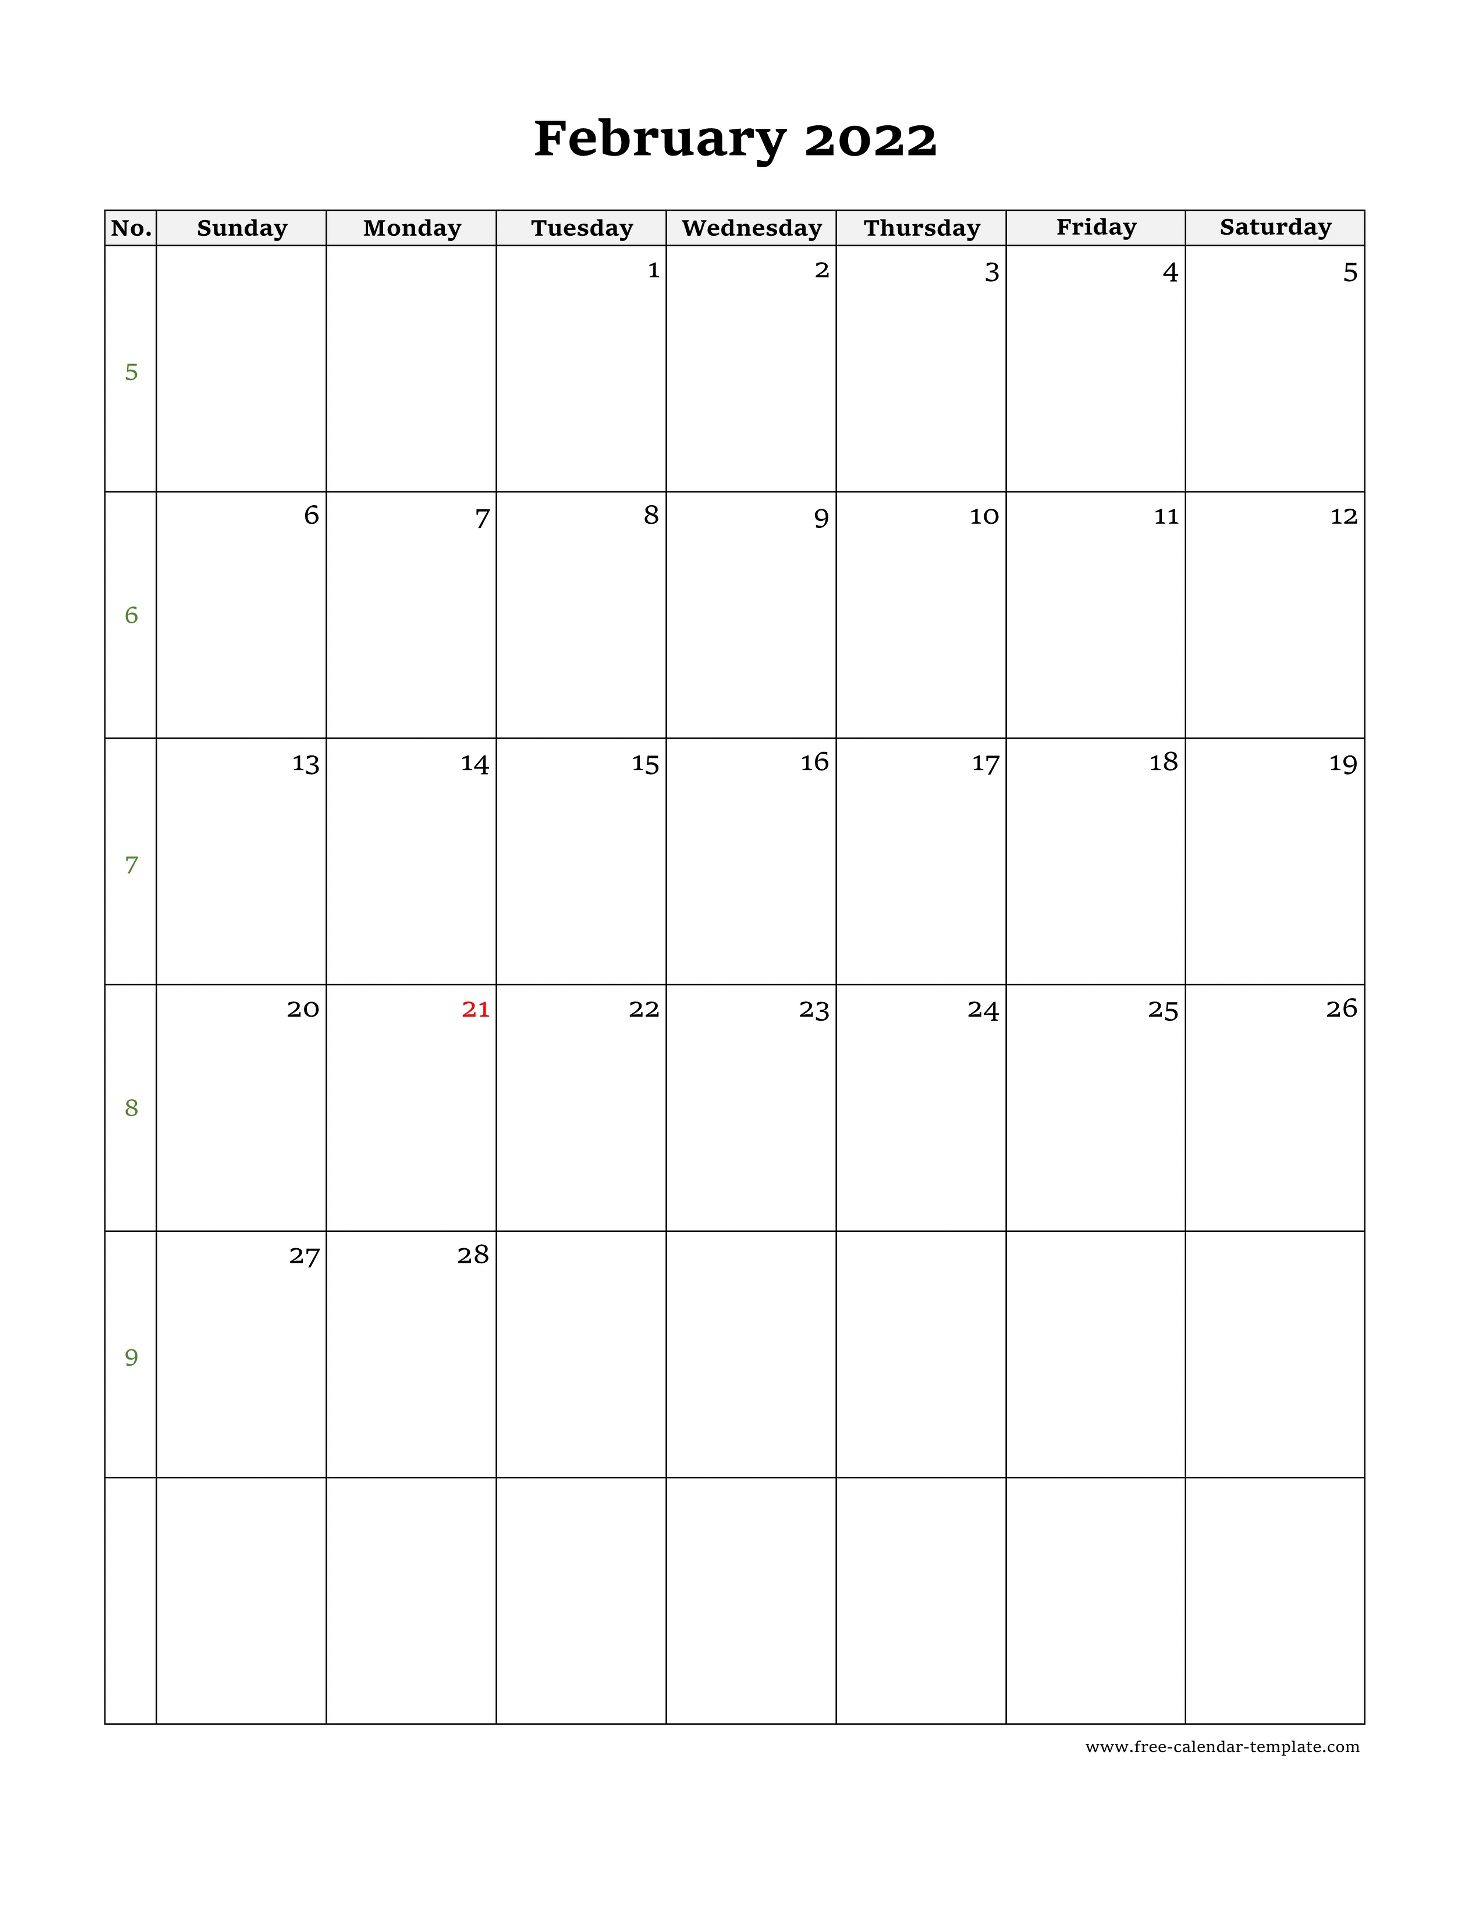 February 2022 Calendar Vertical February Calendar 2022 Simple Design With Large Box On Each Day For Notes.  | Free-Calendar-Template.com